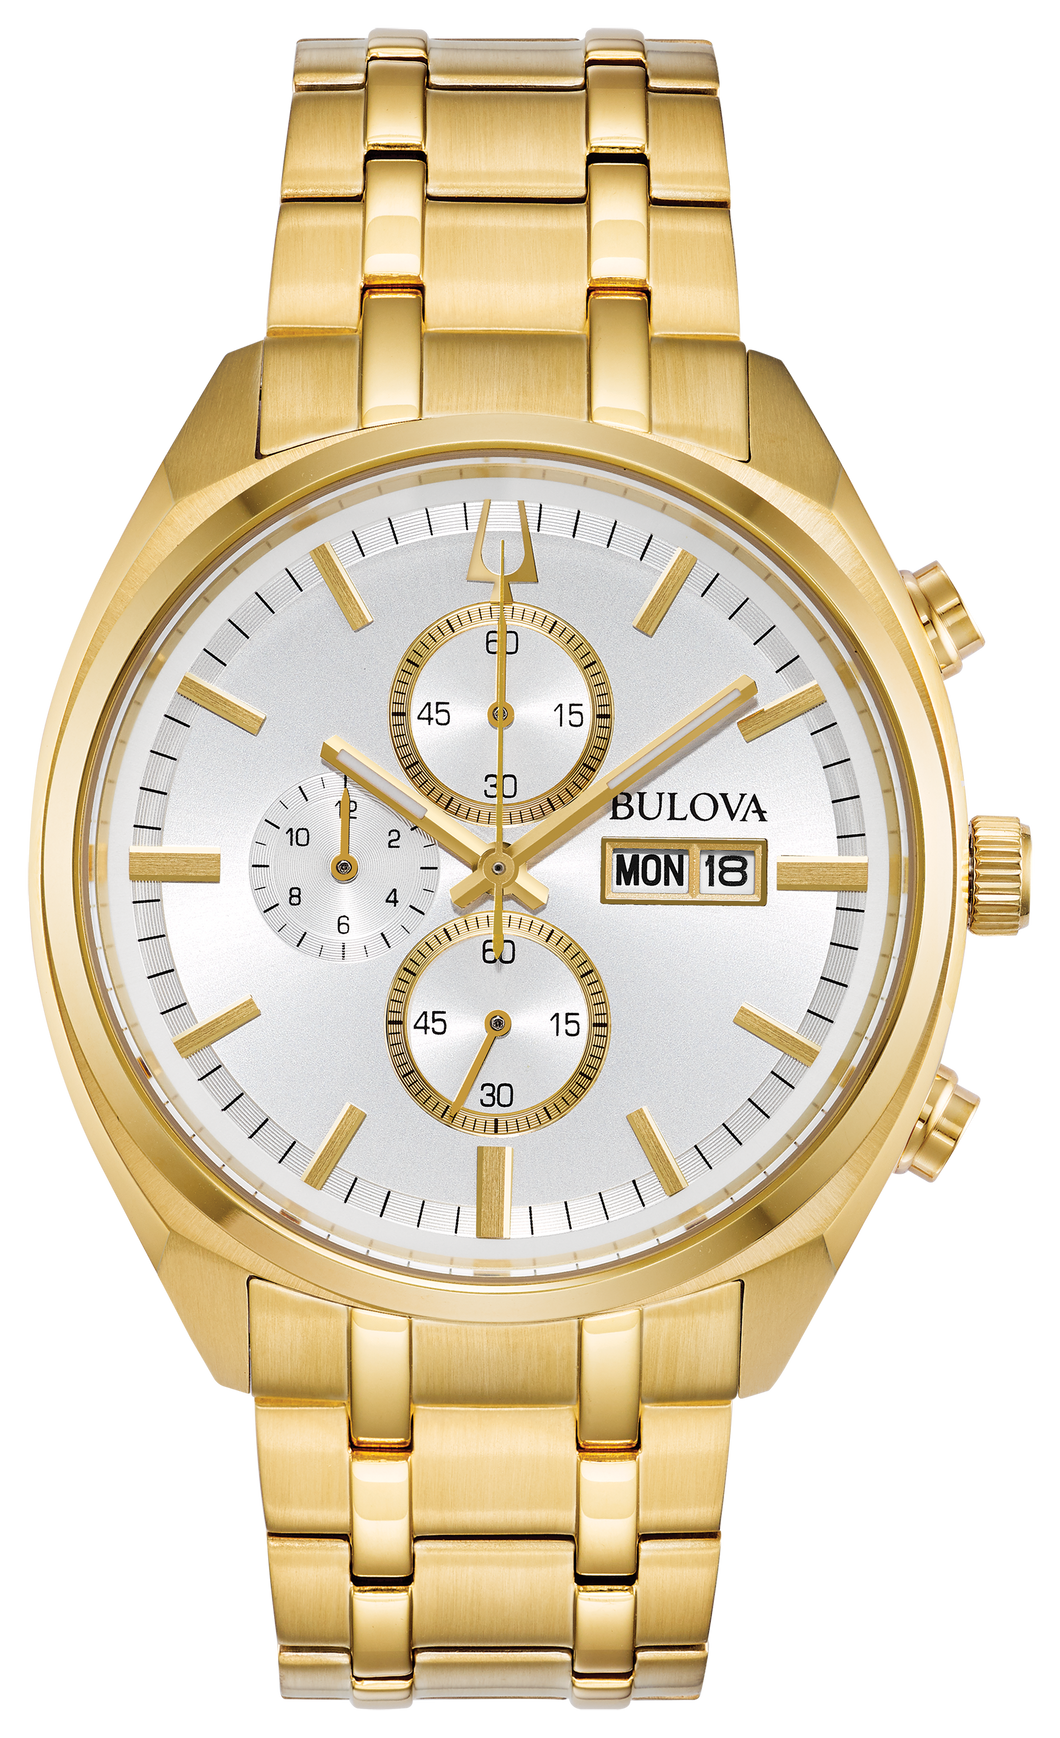 Bulova Men's Quartz Surveyor Bracelet Watch - Product Code - 97C109